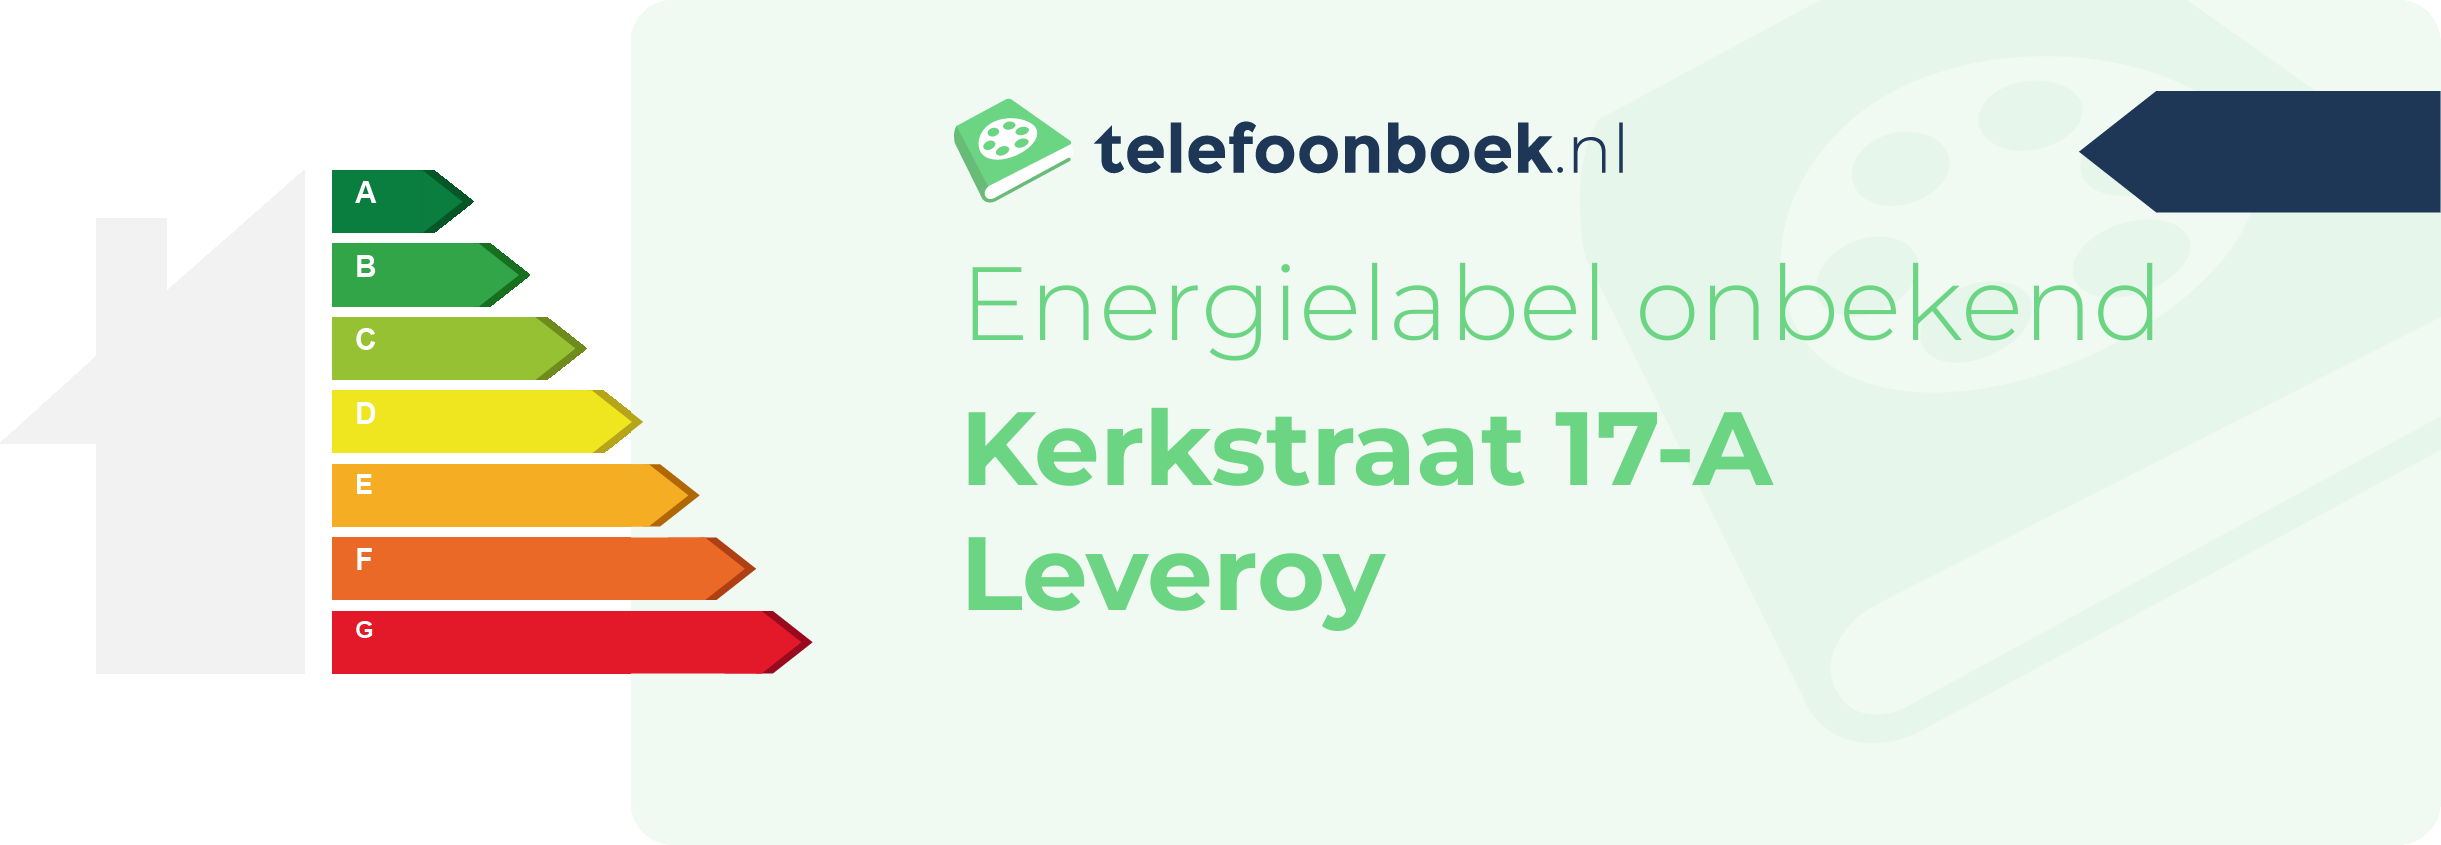 Energielabel Kerkstraat 17-A Leveroy